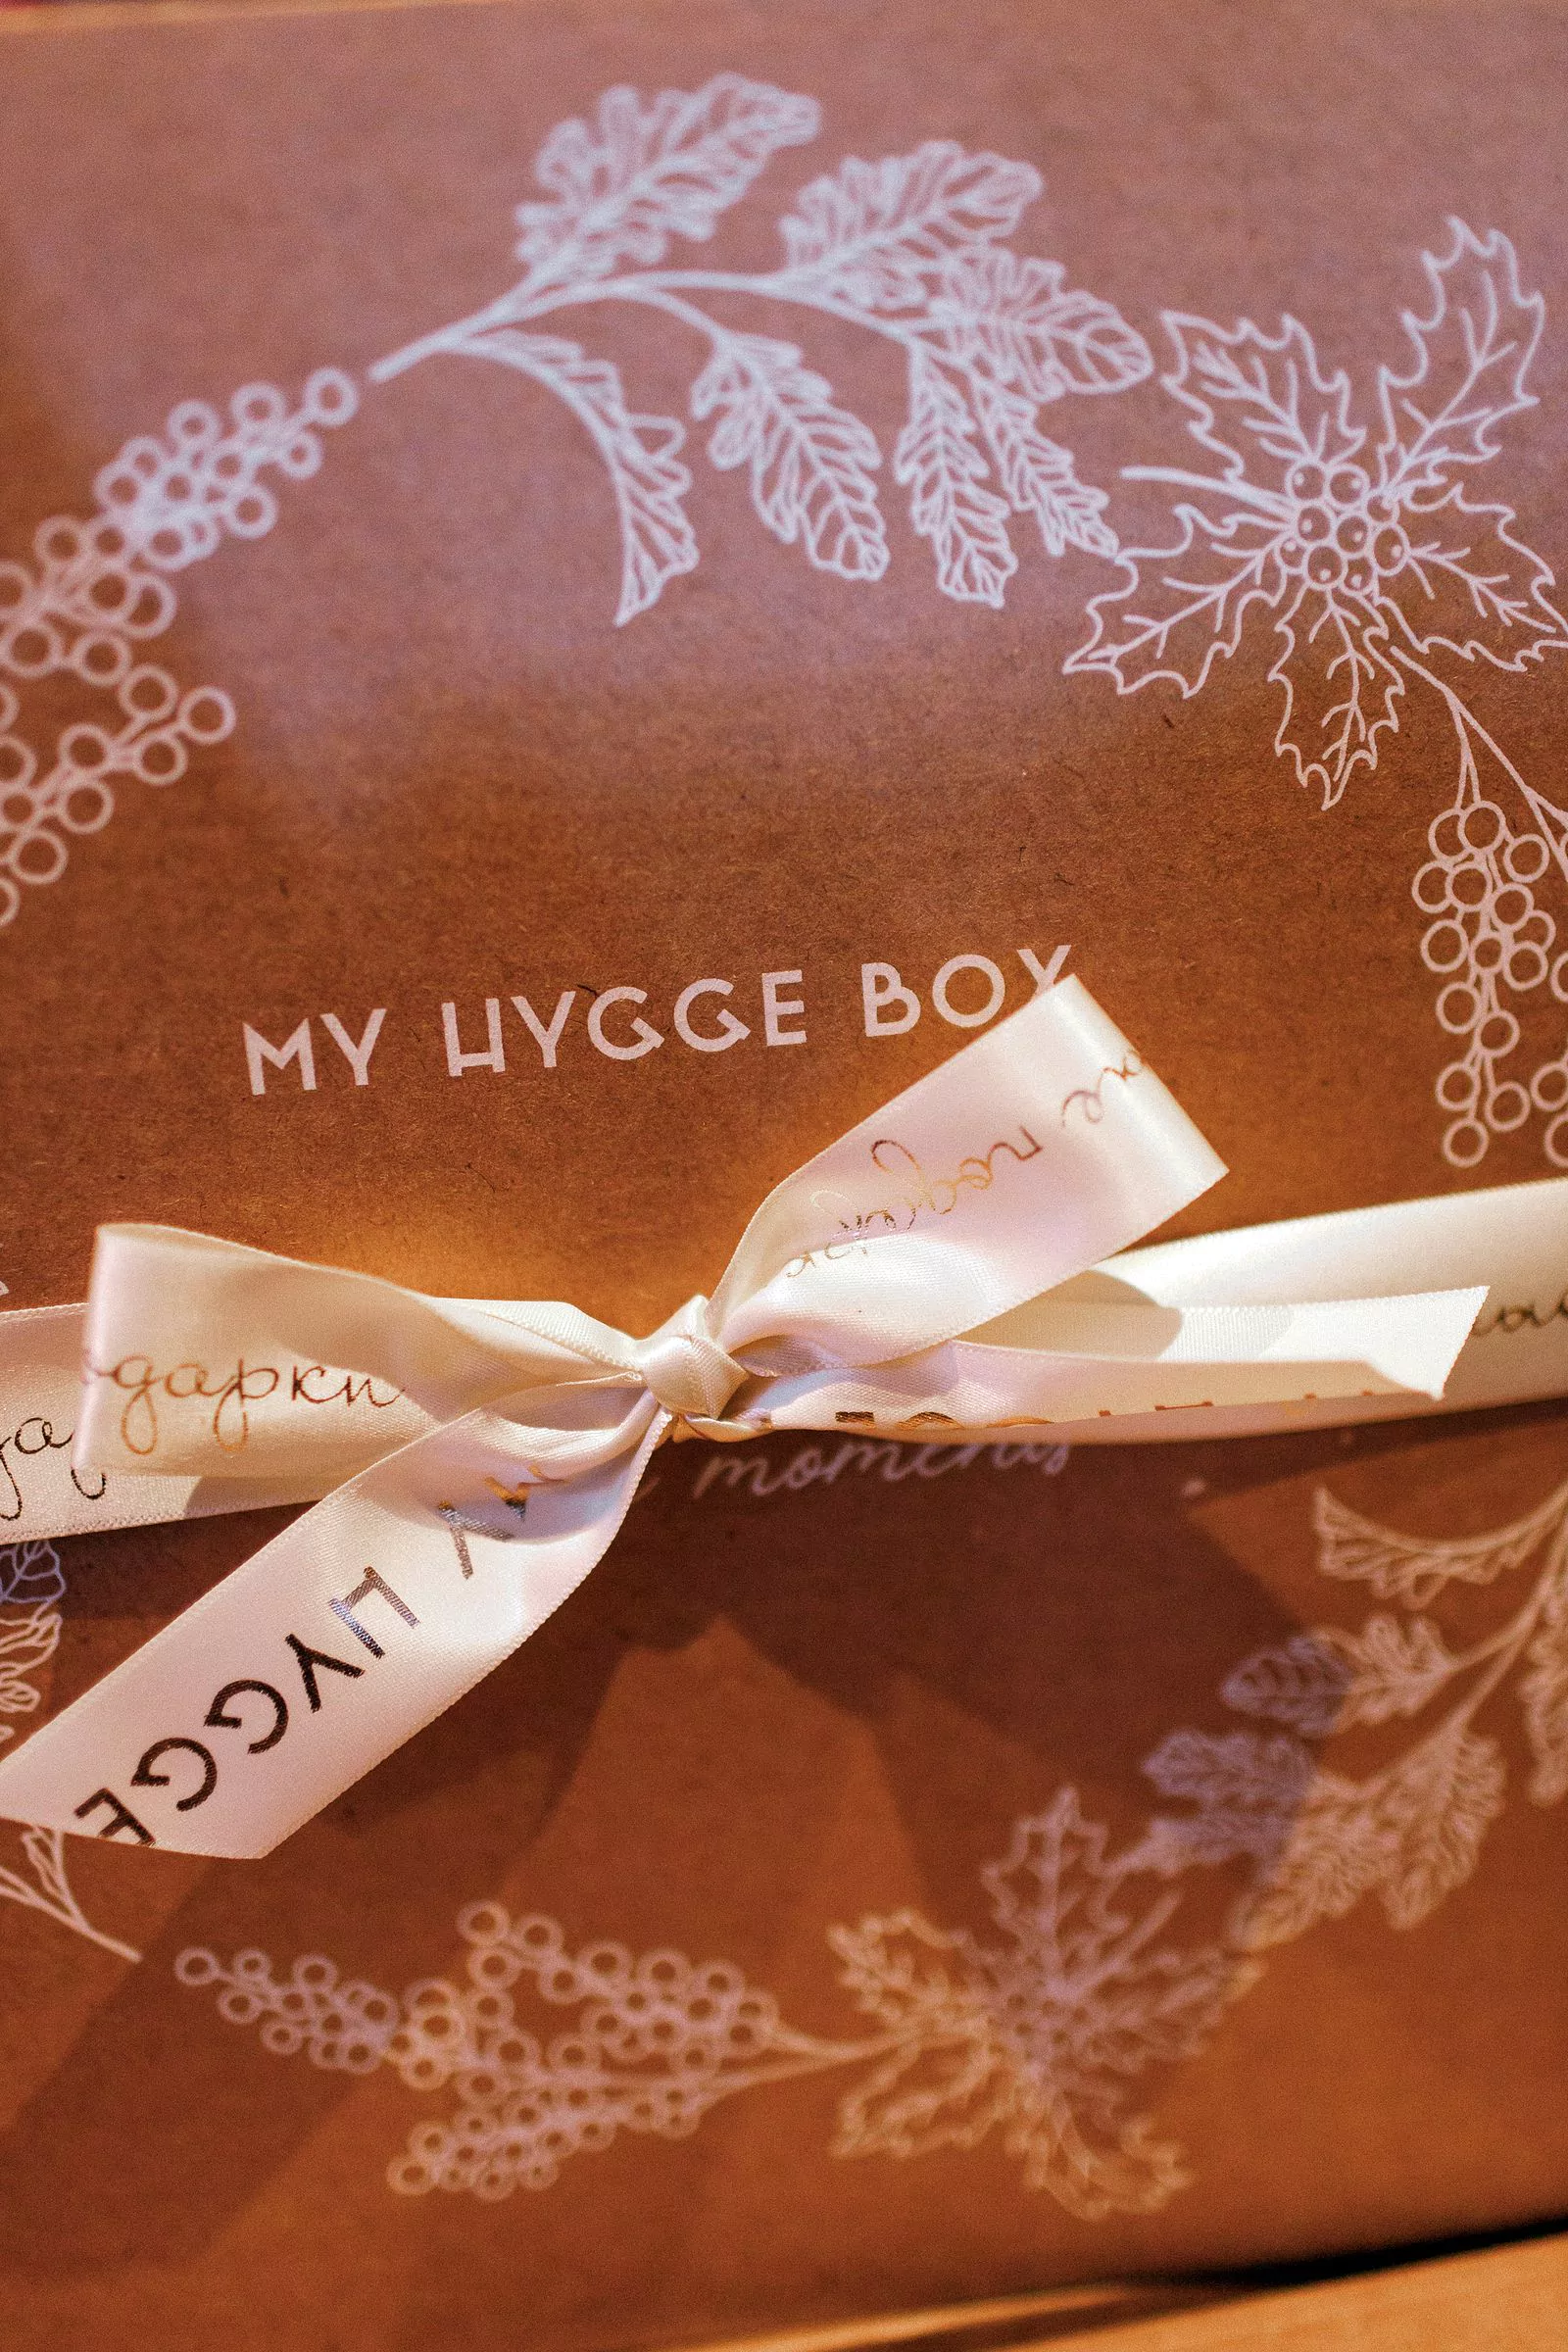 бренд My Hygge Box отметил своё 5-летие, фото 4